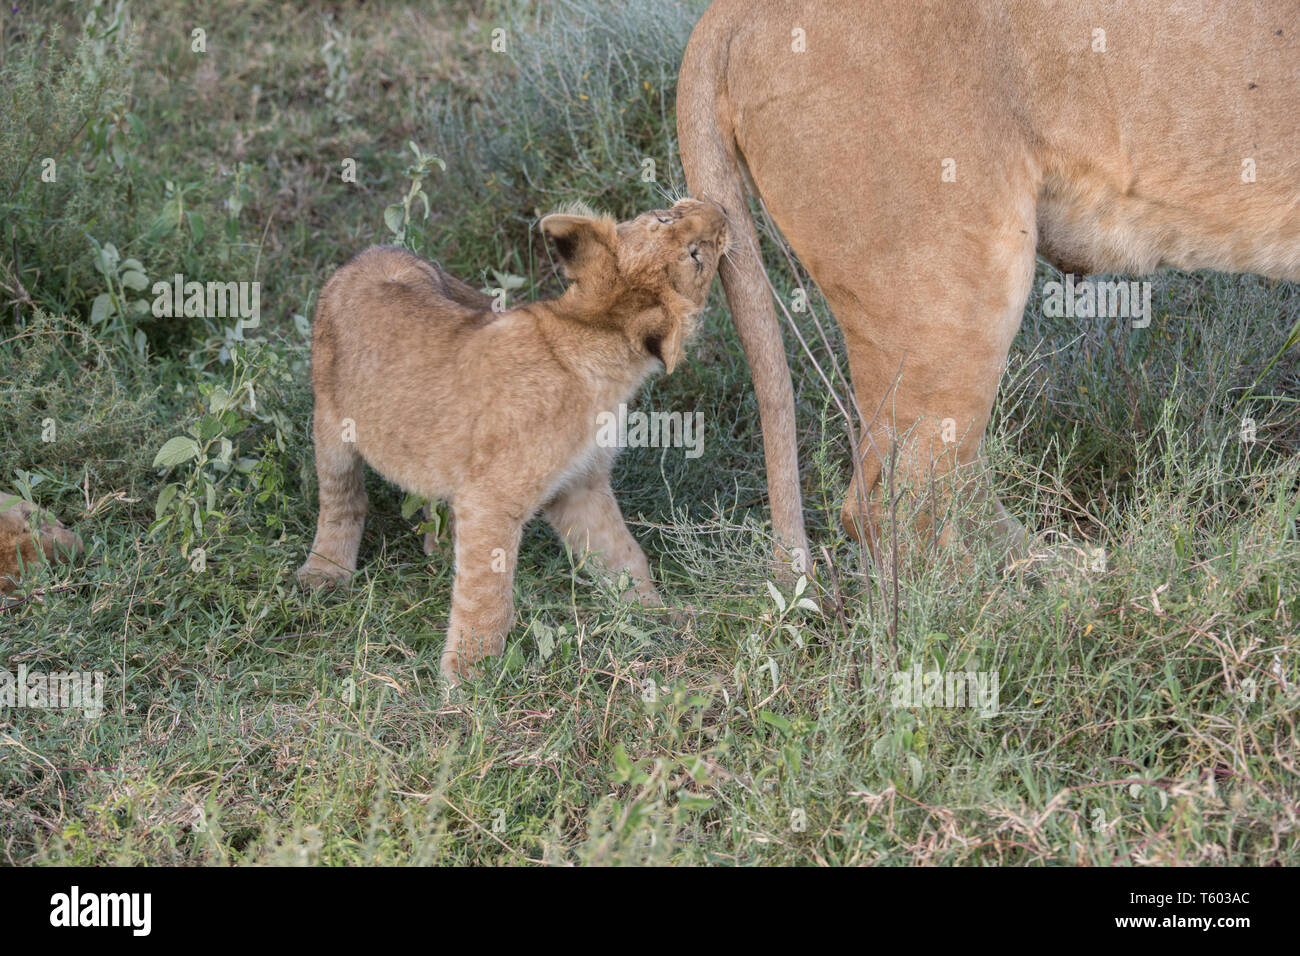 Lion cub biting Mom's tail, Tanzania Stock Photo